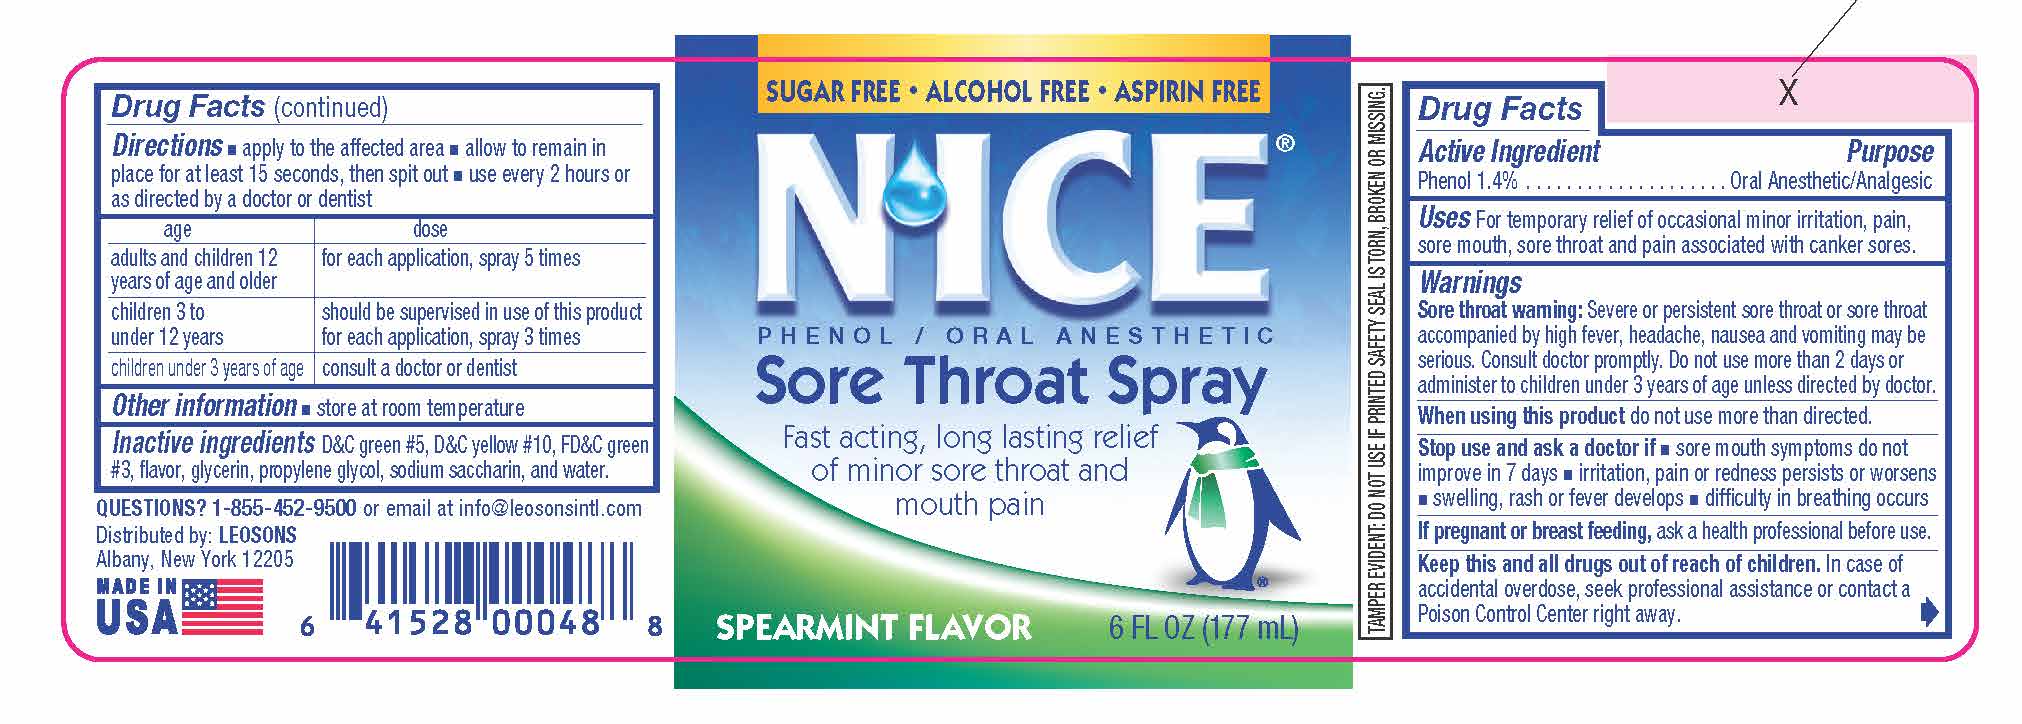 NICE Throat Spearmint